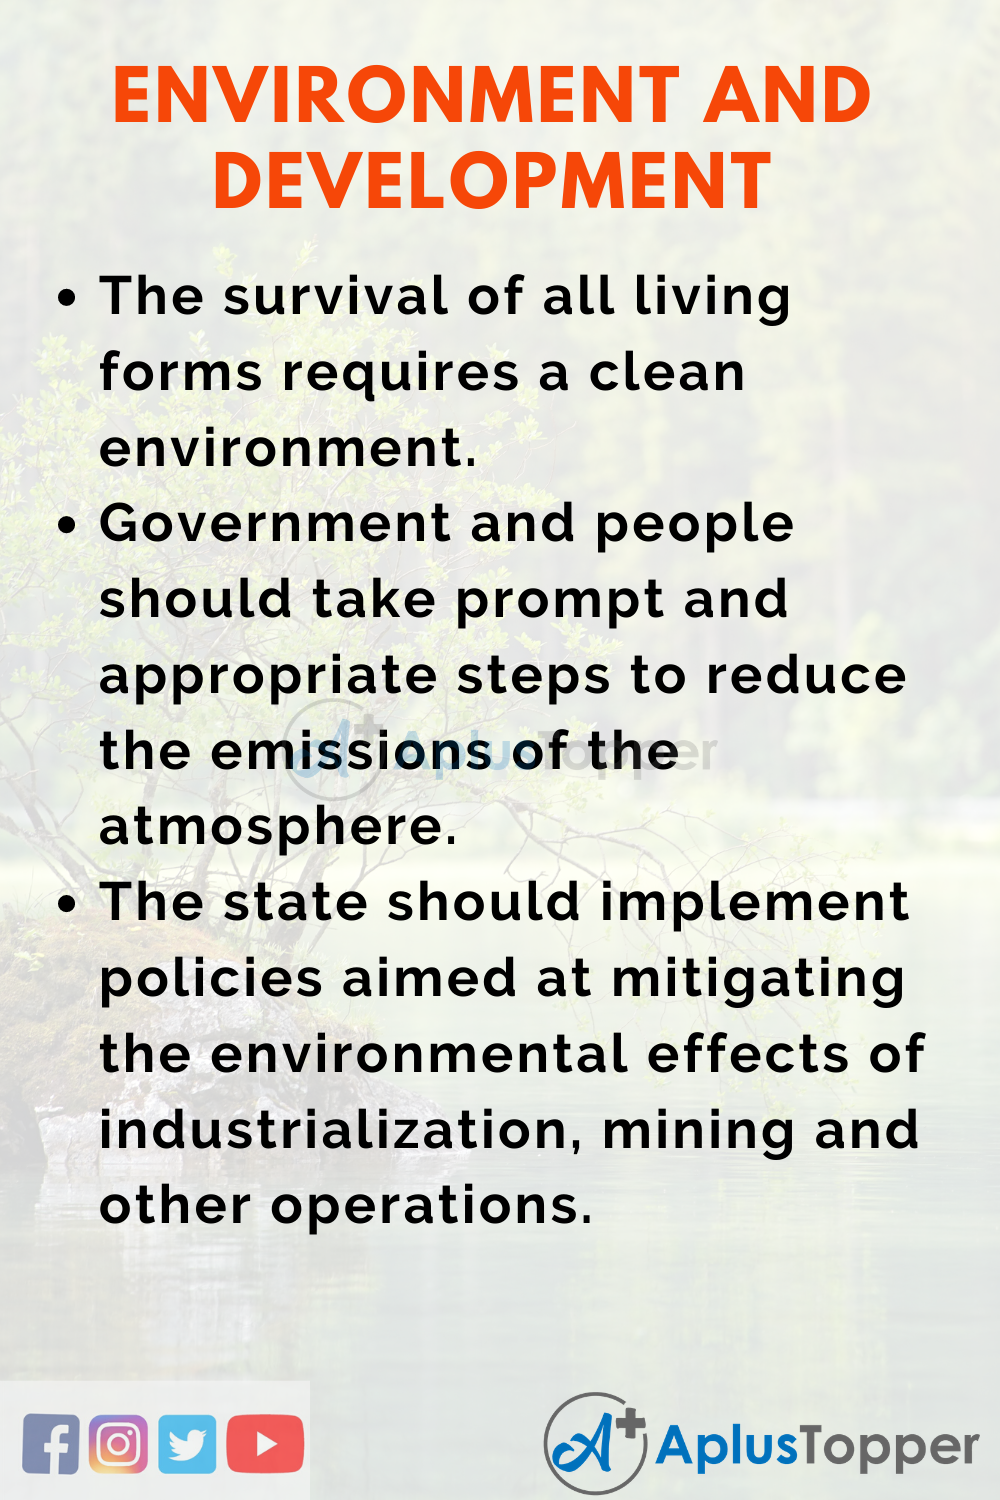 write an essay on environment vs development